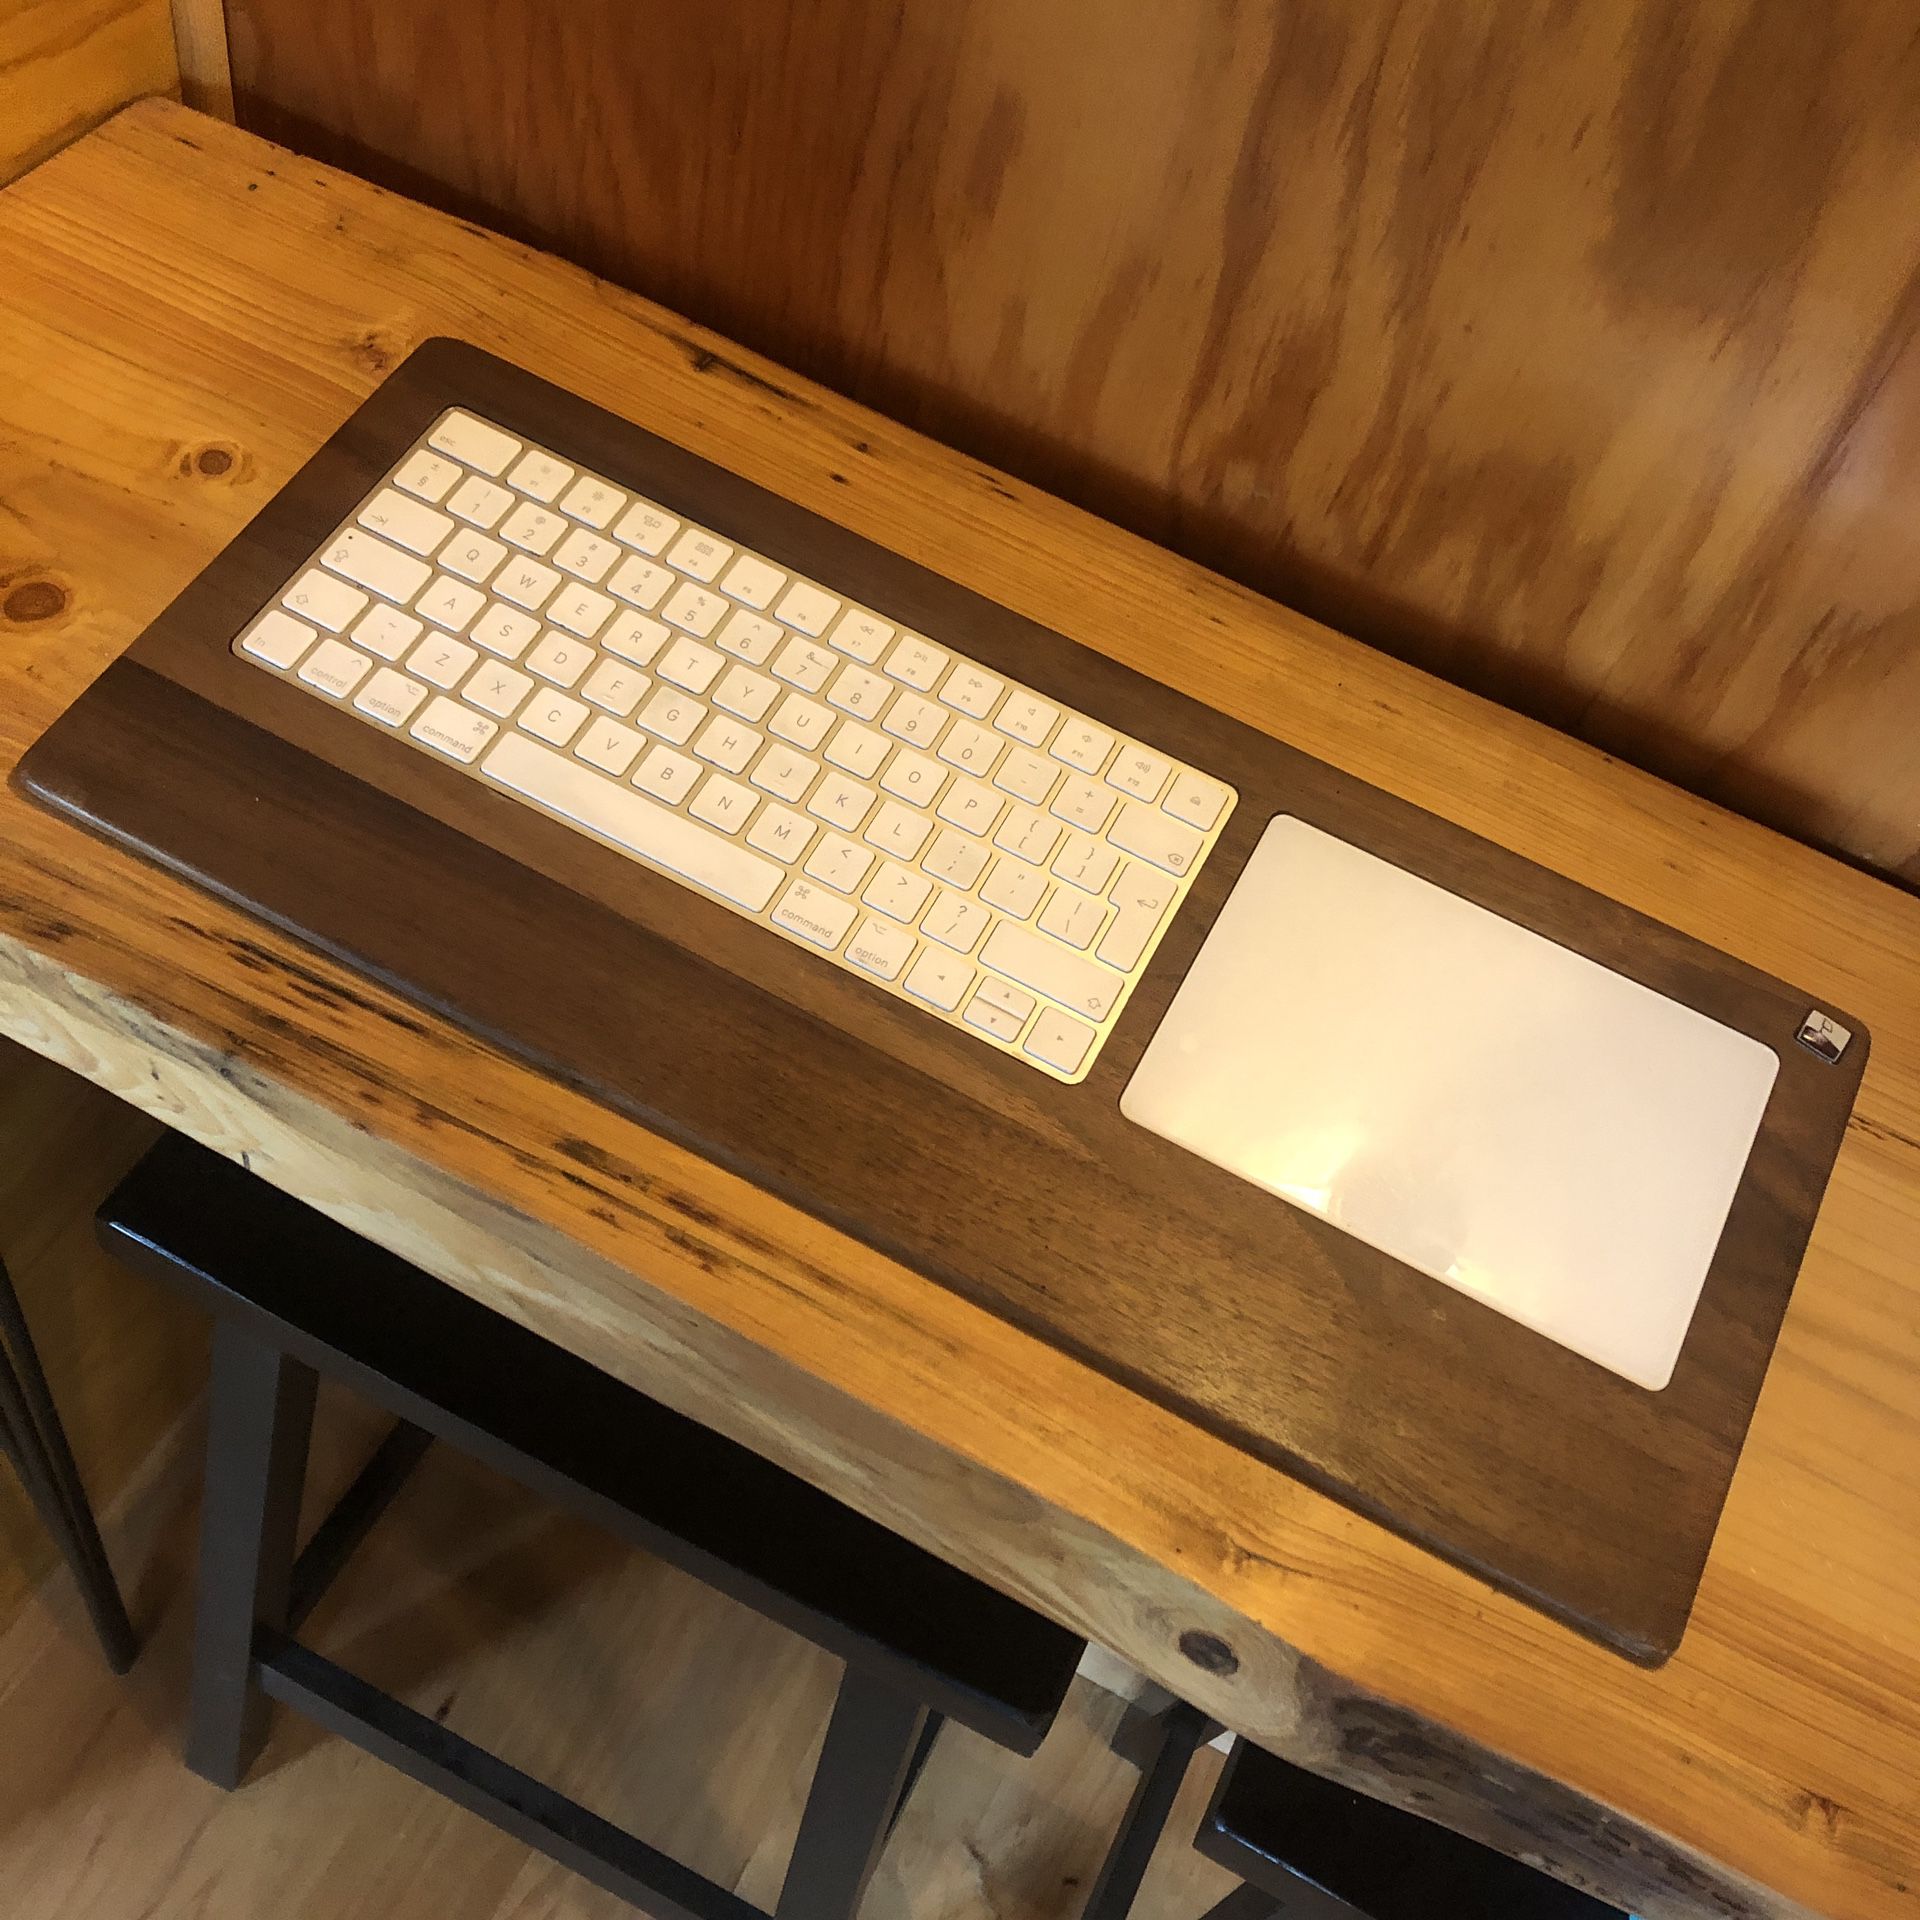 Apple Magic Keyboard And Trackpad w/tray